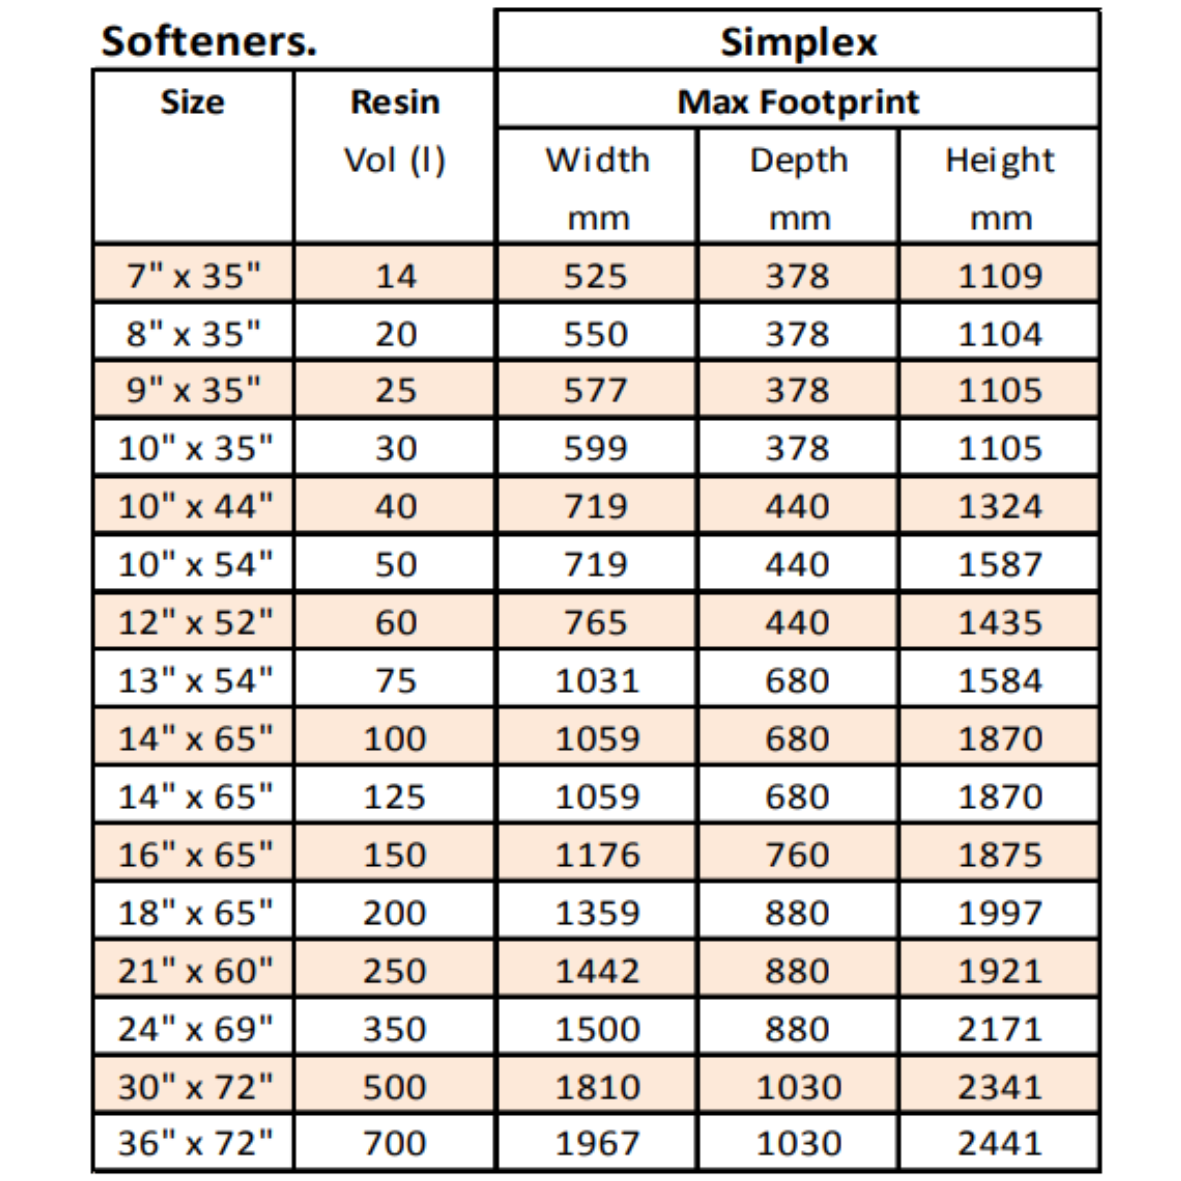 13" x 54", 75L, Simplex Water Softener, Autotrol 268 Time Controller, 3m³/hr